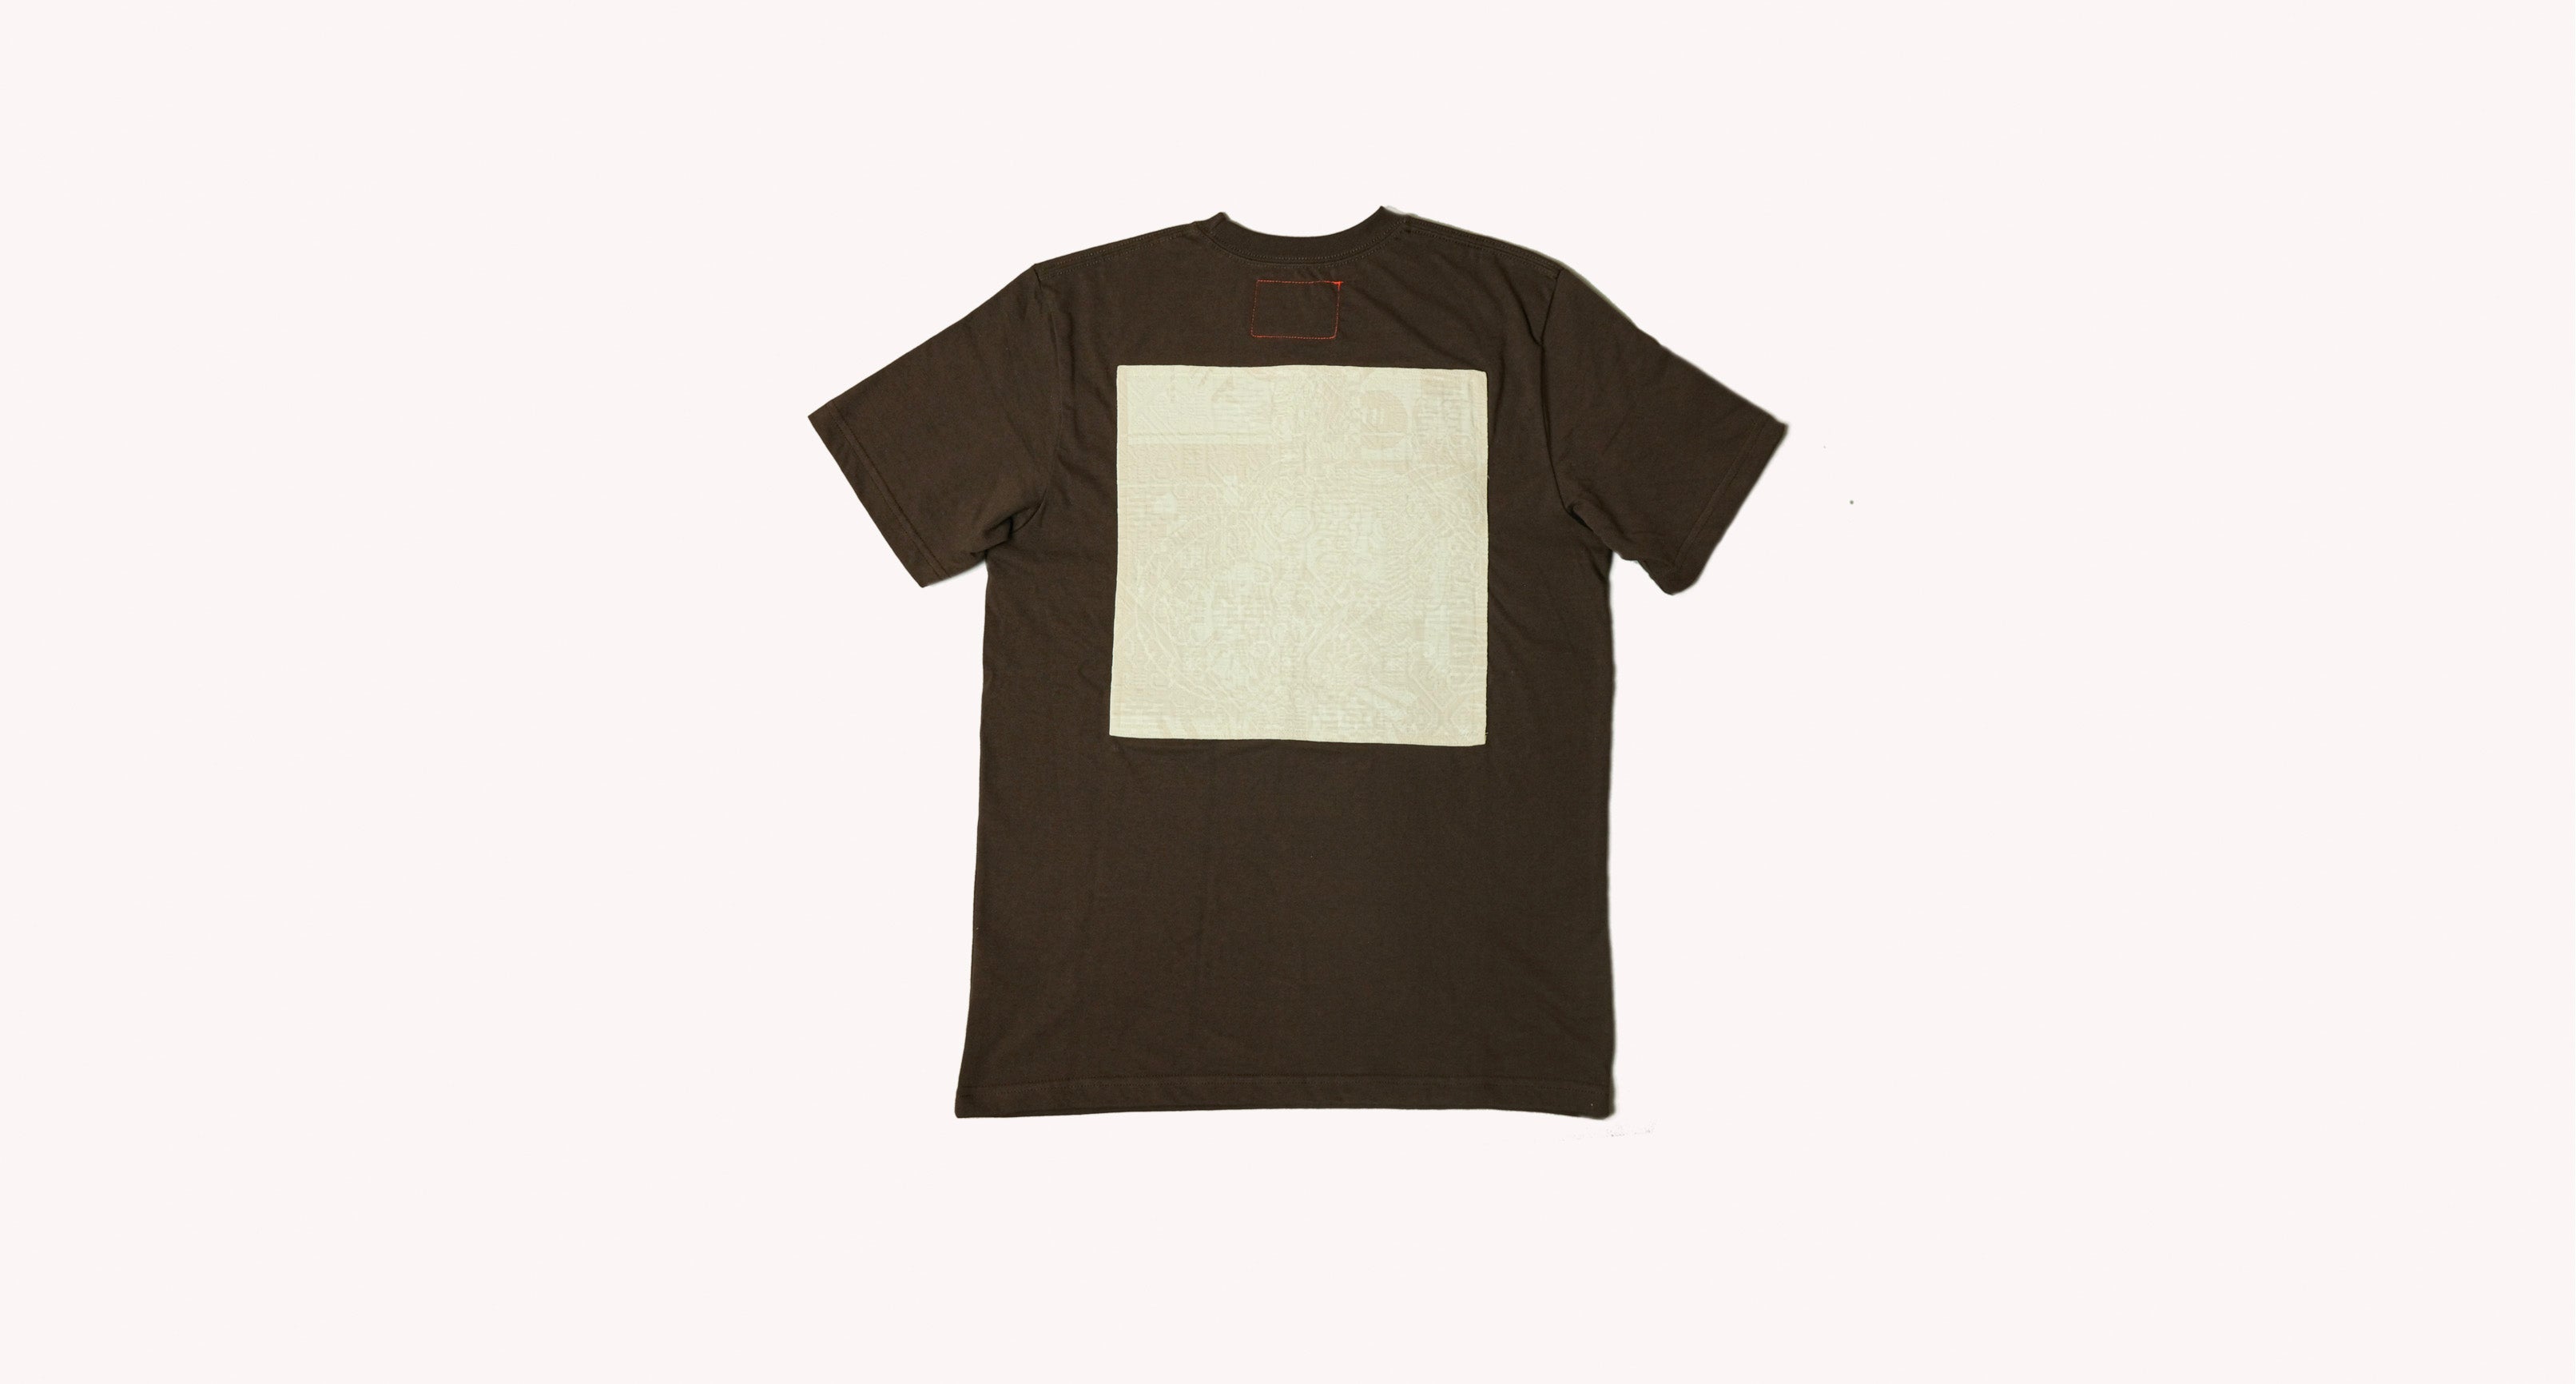 Heavyweight T-Shirt - Chocolate Brown